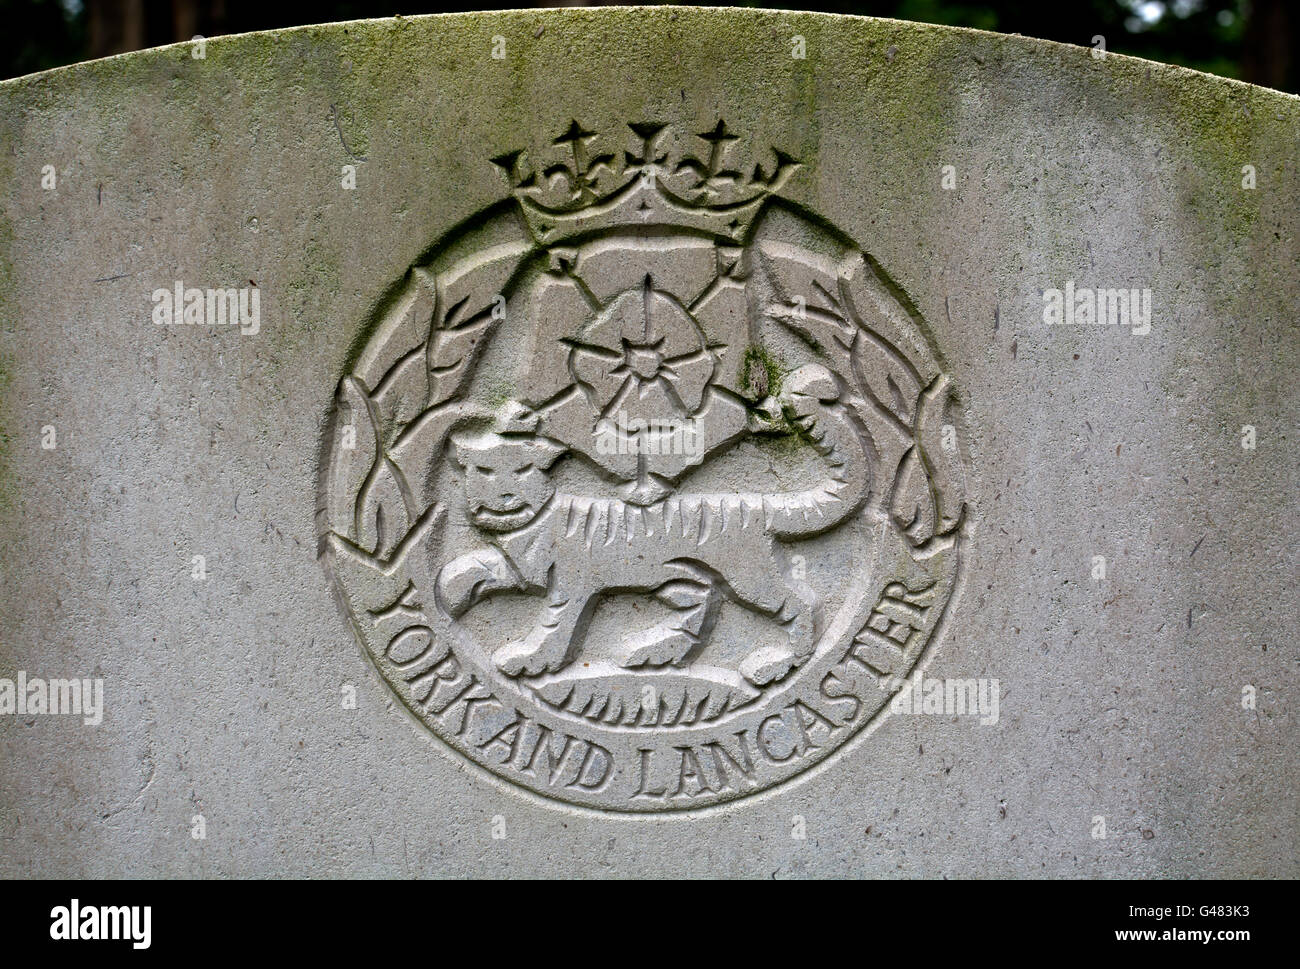 York and Lancaster Regiment badge on a war grave, UK Stock Photo